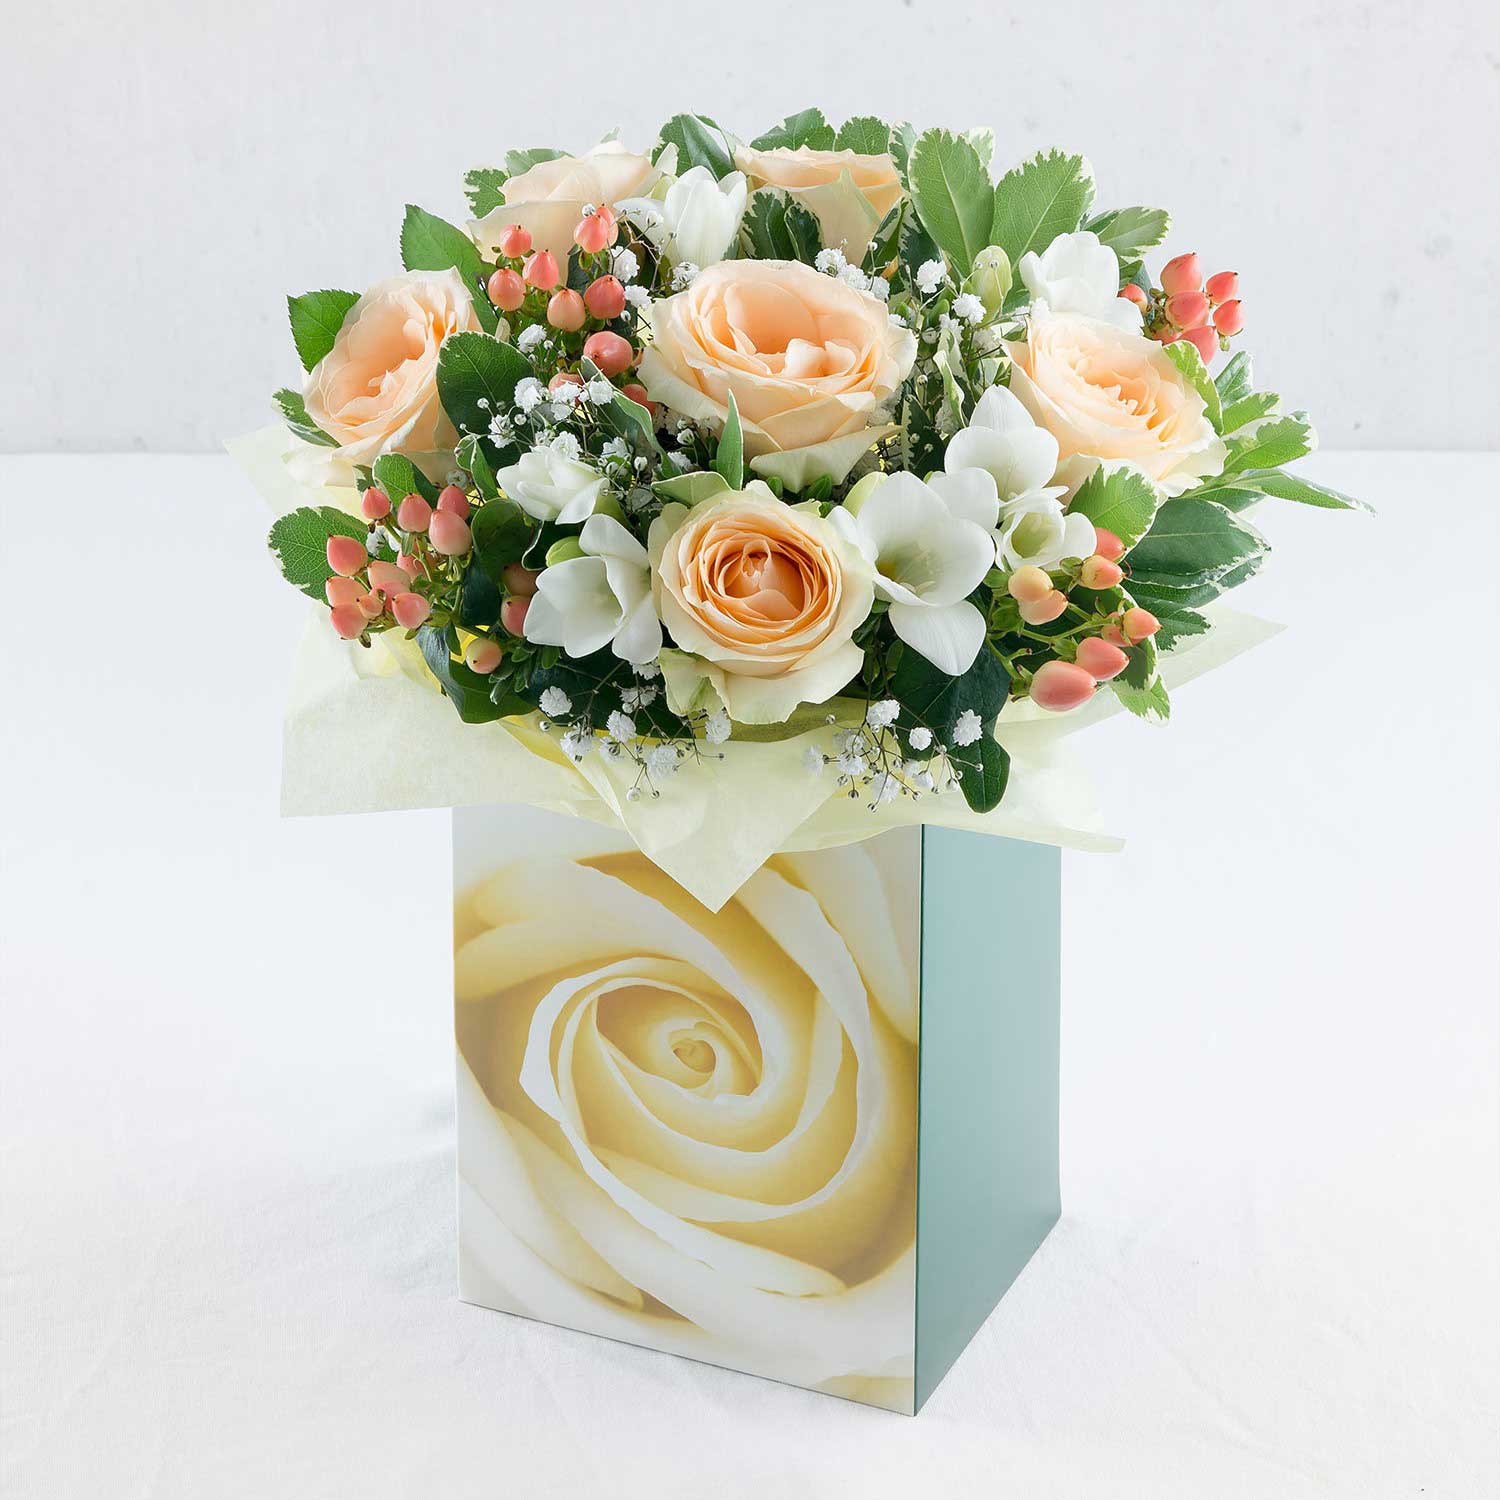 Southern Comfort Peach Garden Rose | DIY Wedding Rose | FiftyFlowers